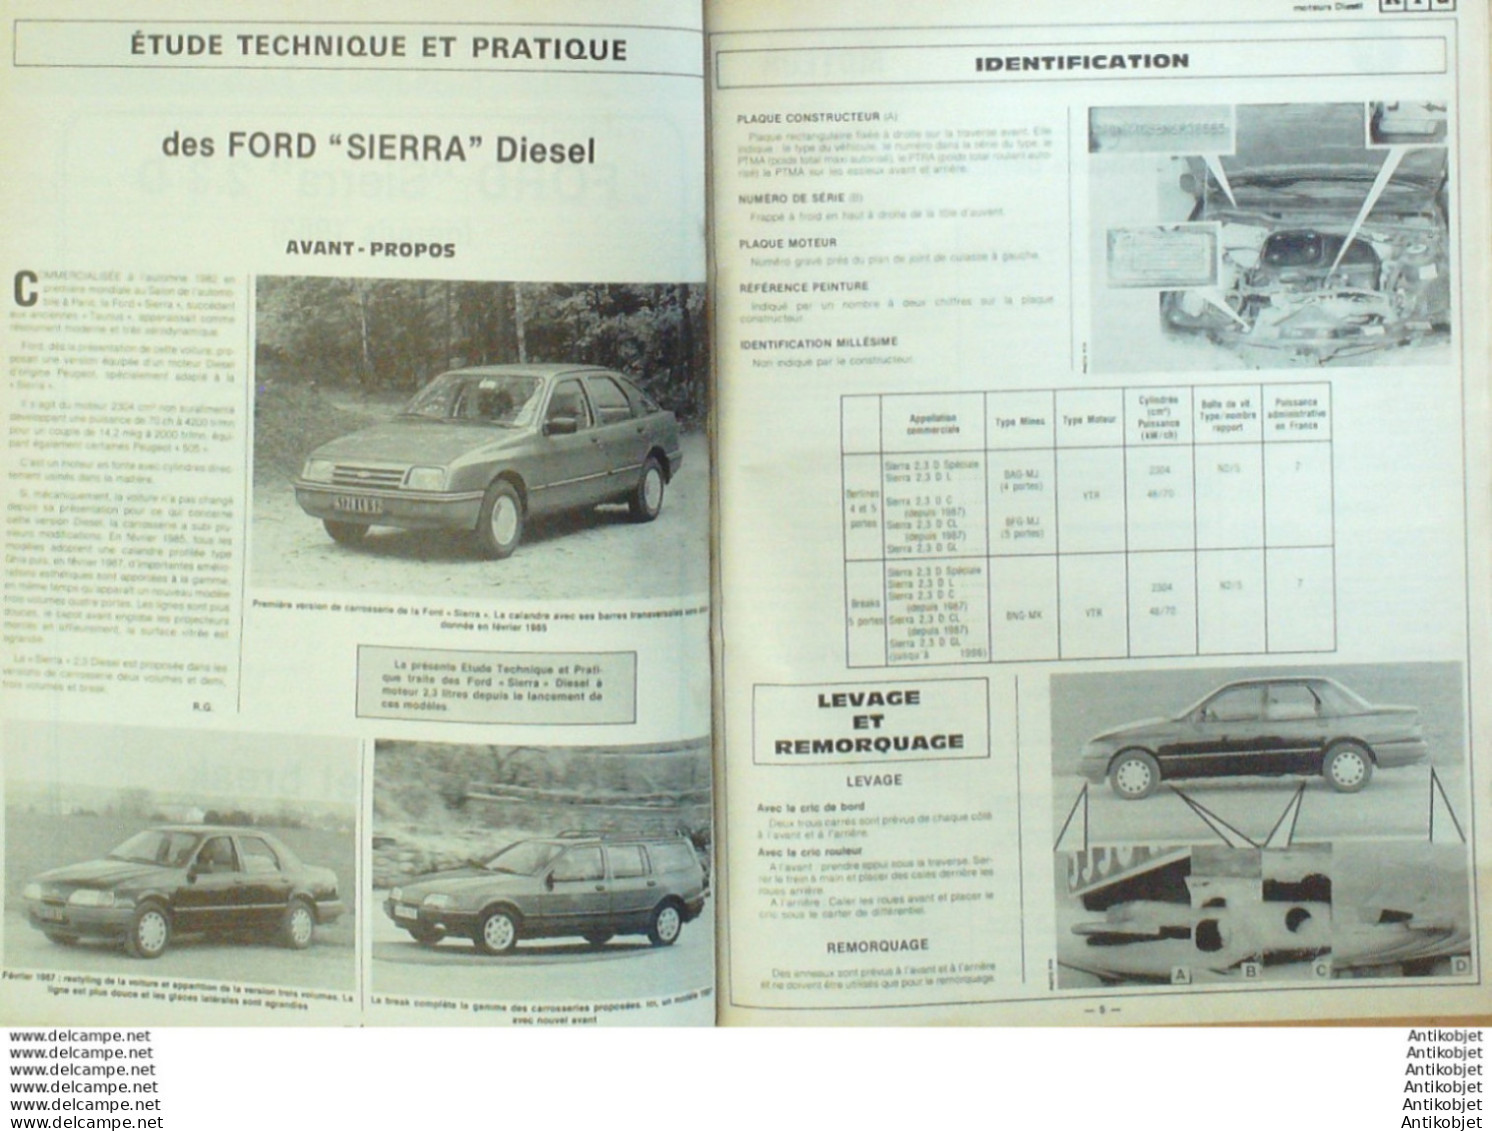 Revue Technique Automobile Ford Sierra 2.3D Renault 11 & 9 Mazda 121   N°492 - Auto/Moto